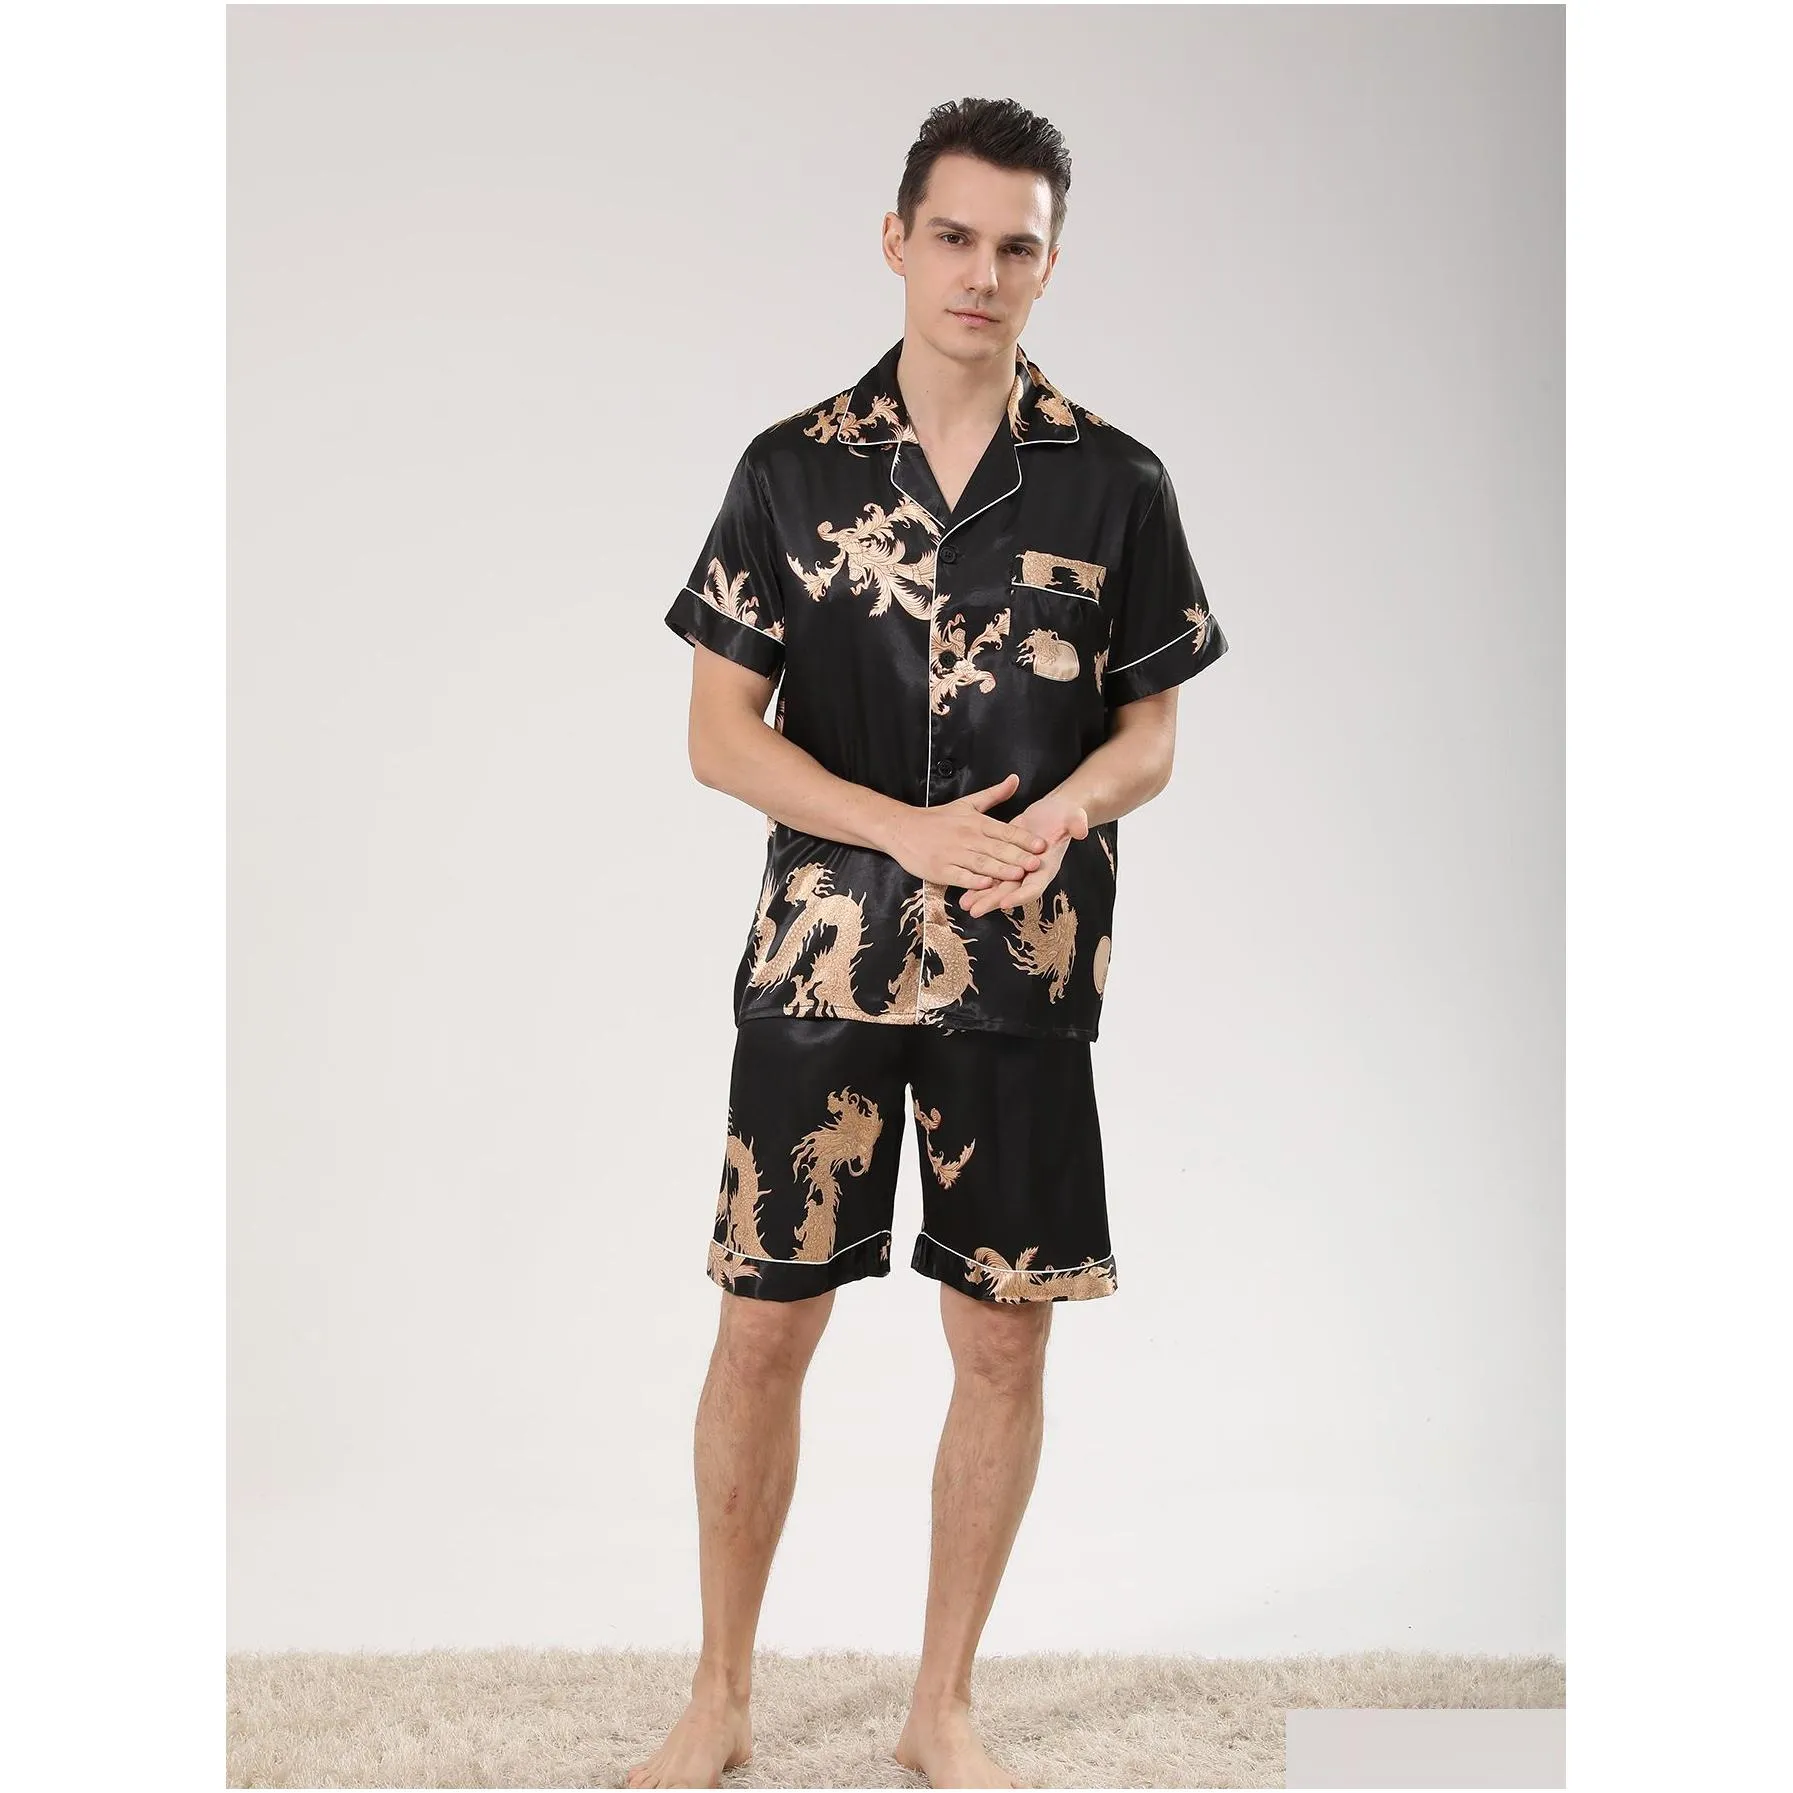 Men`S Sleepwear Men Satin Silk Pajamas Sets Shirts Shorts Male Pijama Sleep Wear Leisure Home Clothing Dragon Letter Loungewear Drop Dh49T